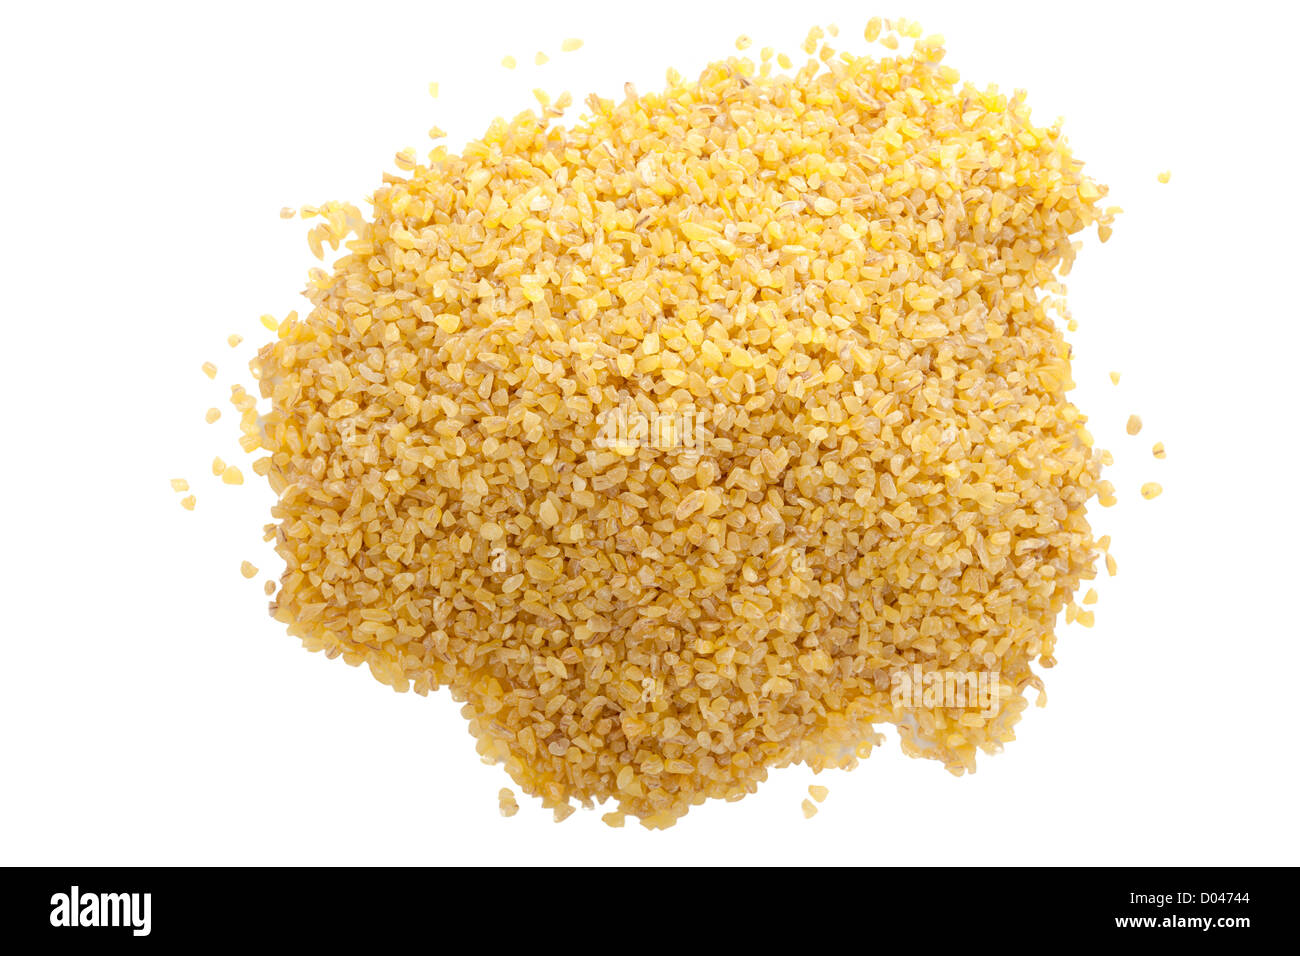 Bulgar / cracked wheat Stock Photo